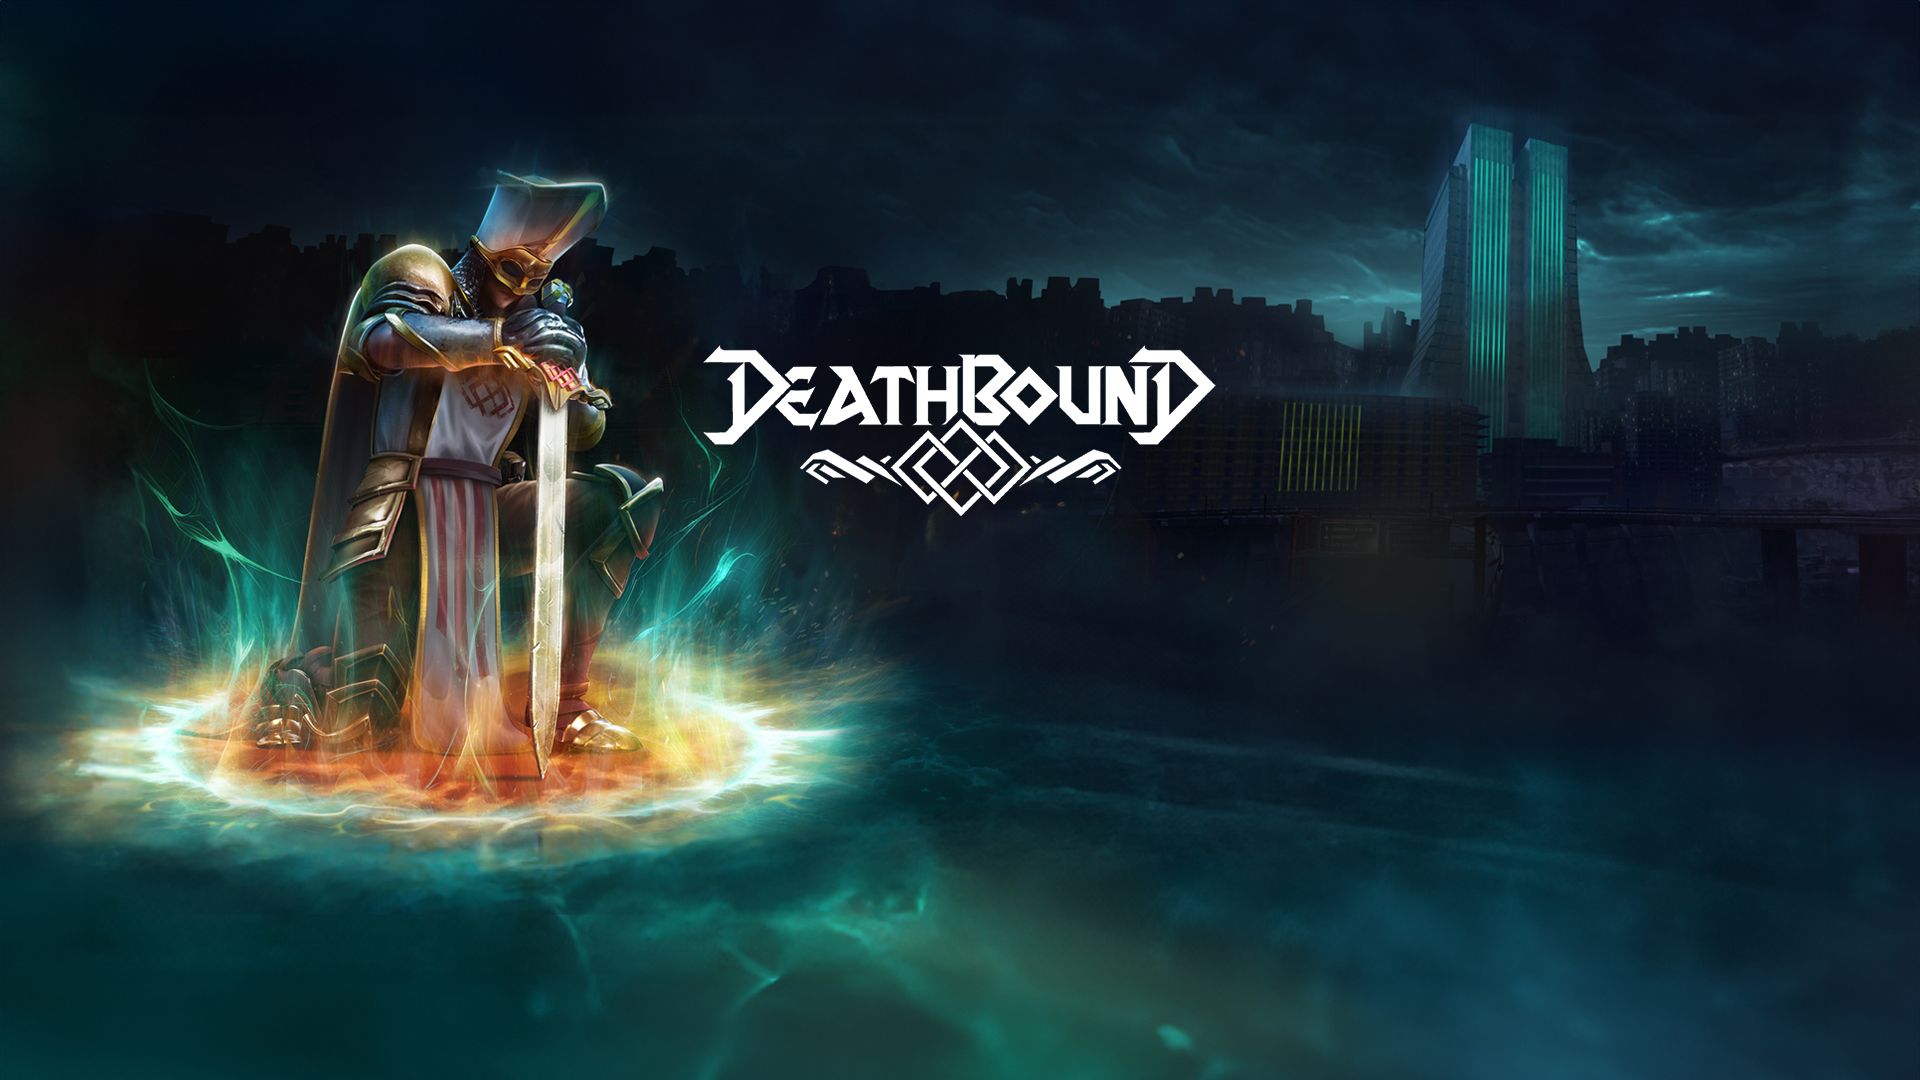 Deathbound เกม Soulslike รูปแบบใหม่ เน้นการต่อสู้แบบปาร์ตี้